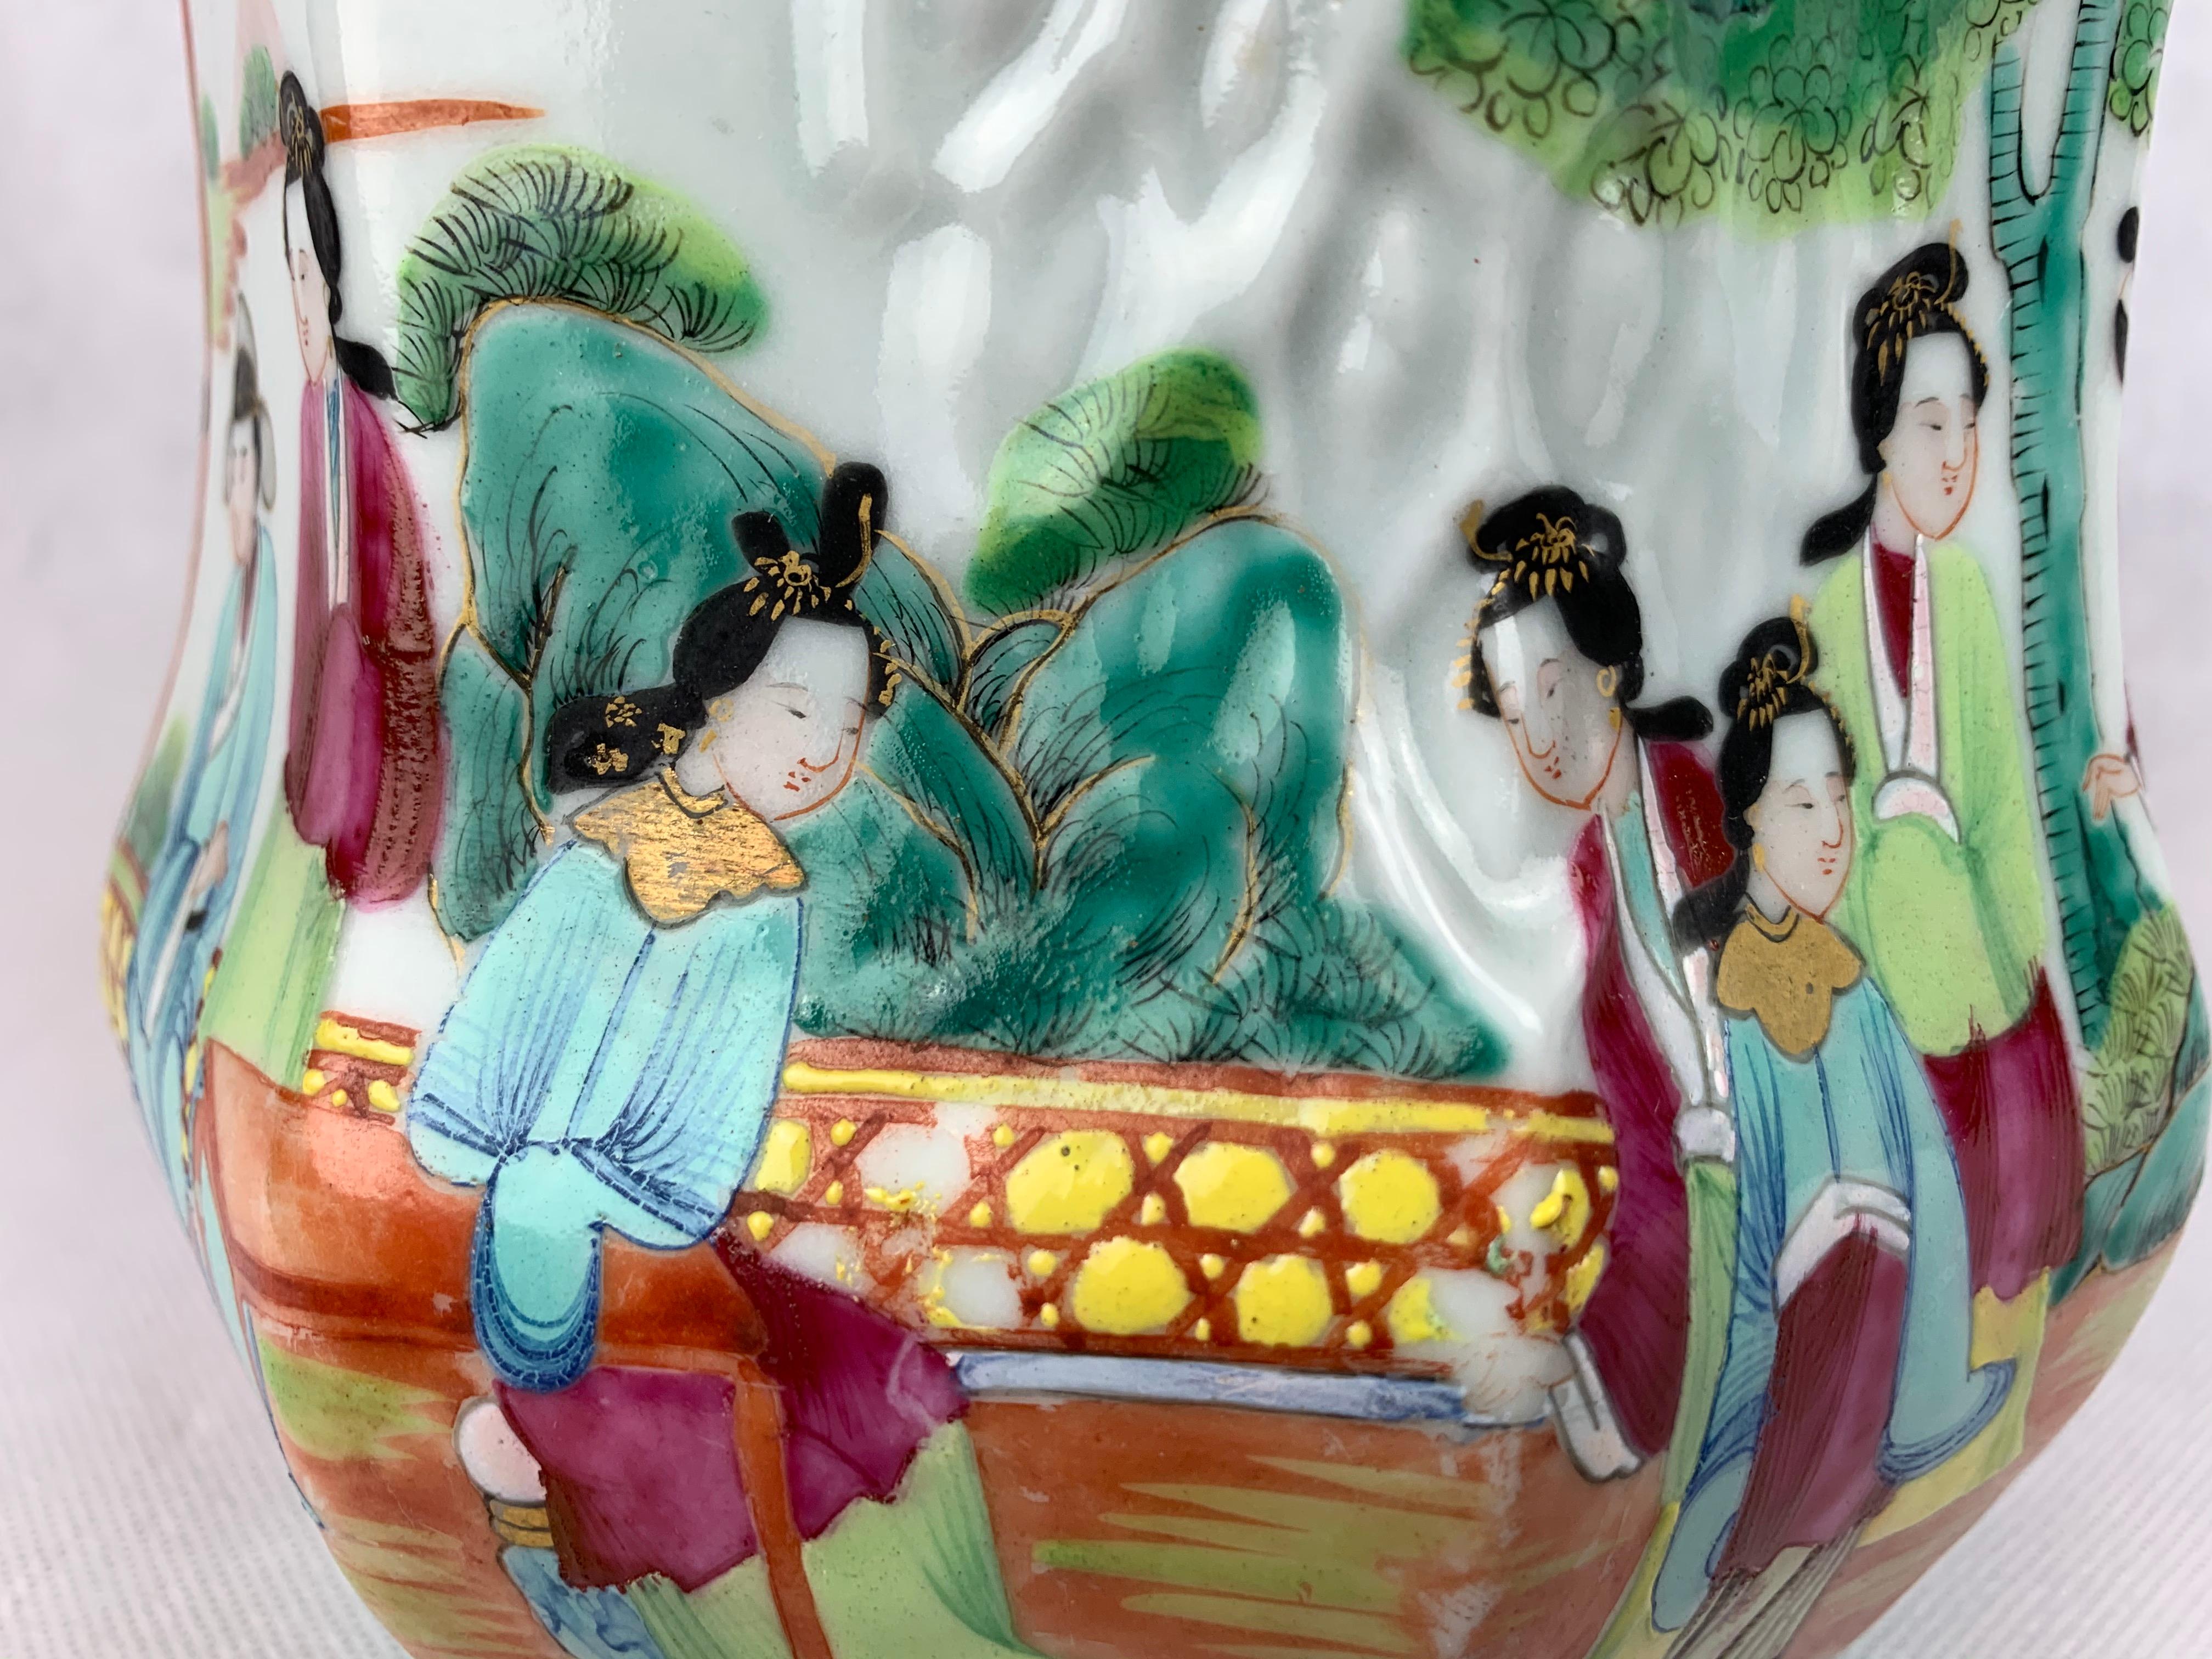   Large Mandarin or Famille Rose Chinese Export Porcelain Pitcher 2